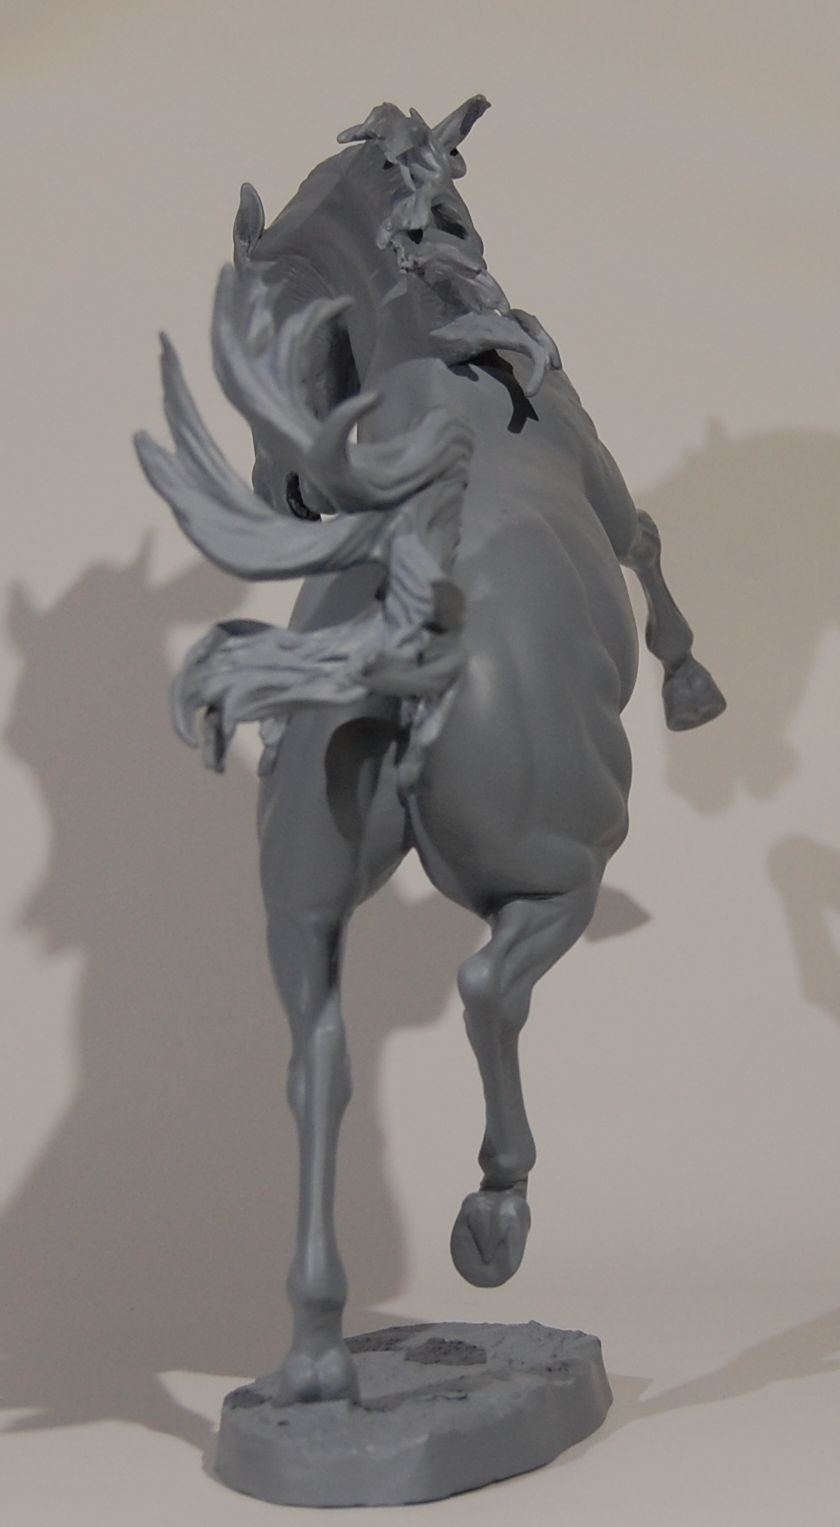 Maggie Bennett Sculpture: Apoxie Sculpt and Rubbing Alcohol